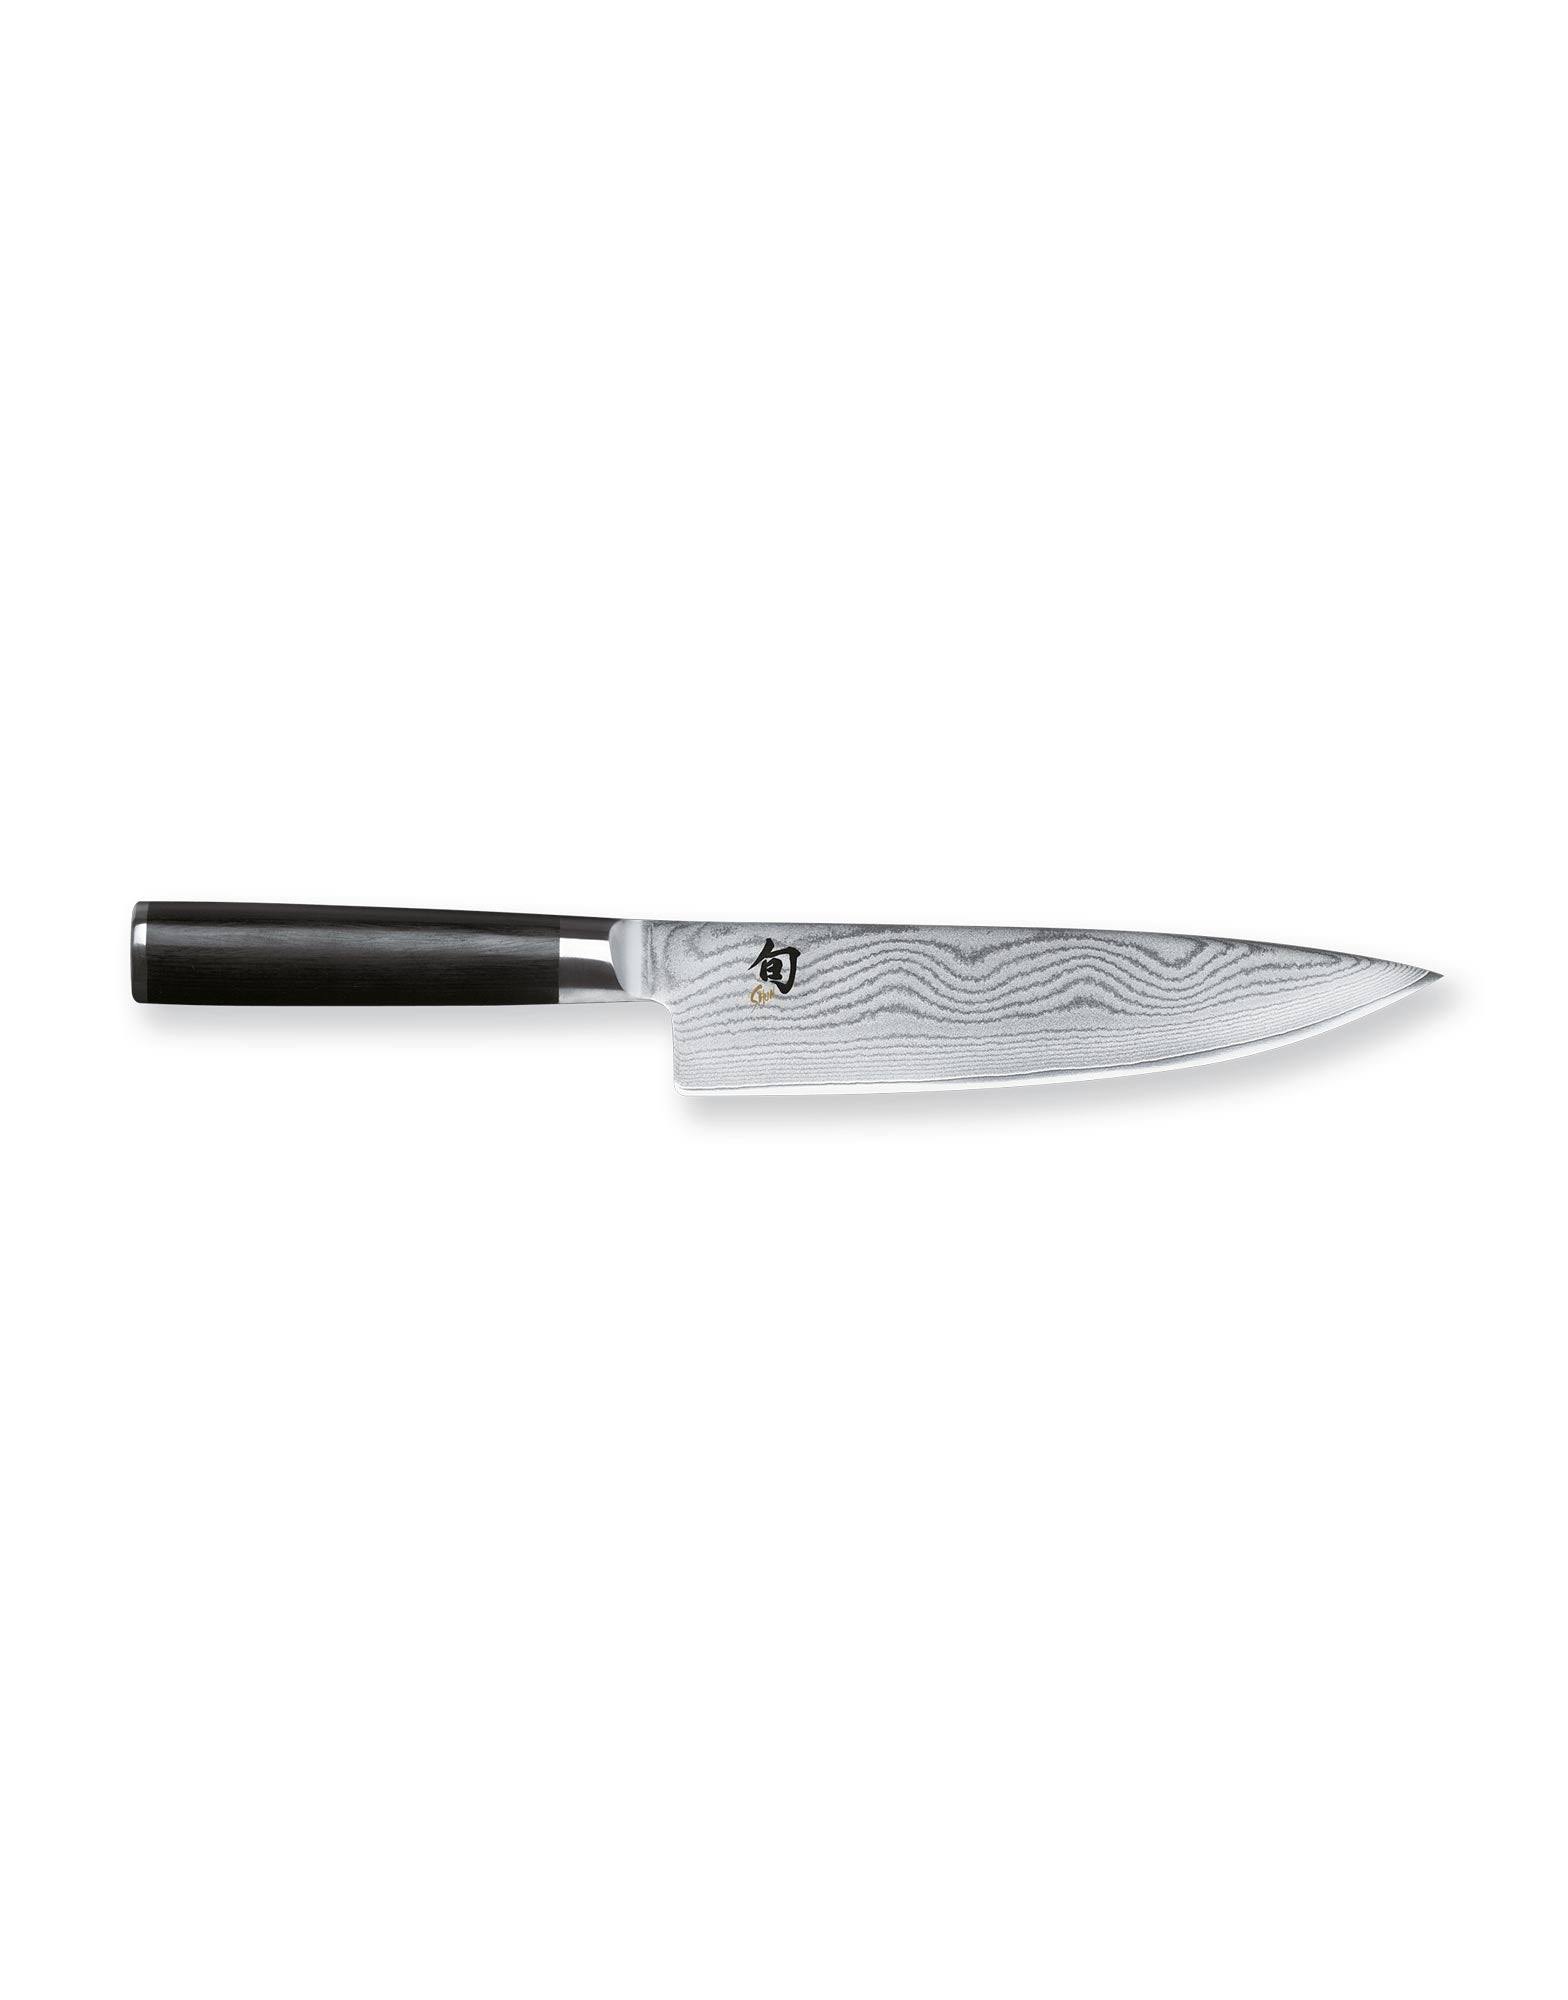 Shun Classic Chef's Knife - 8"